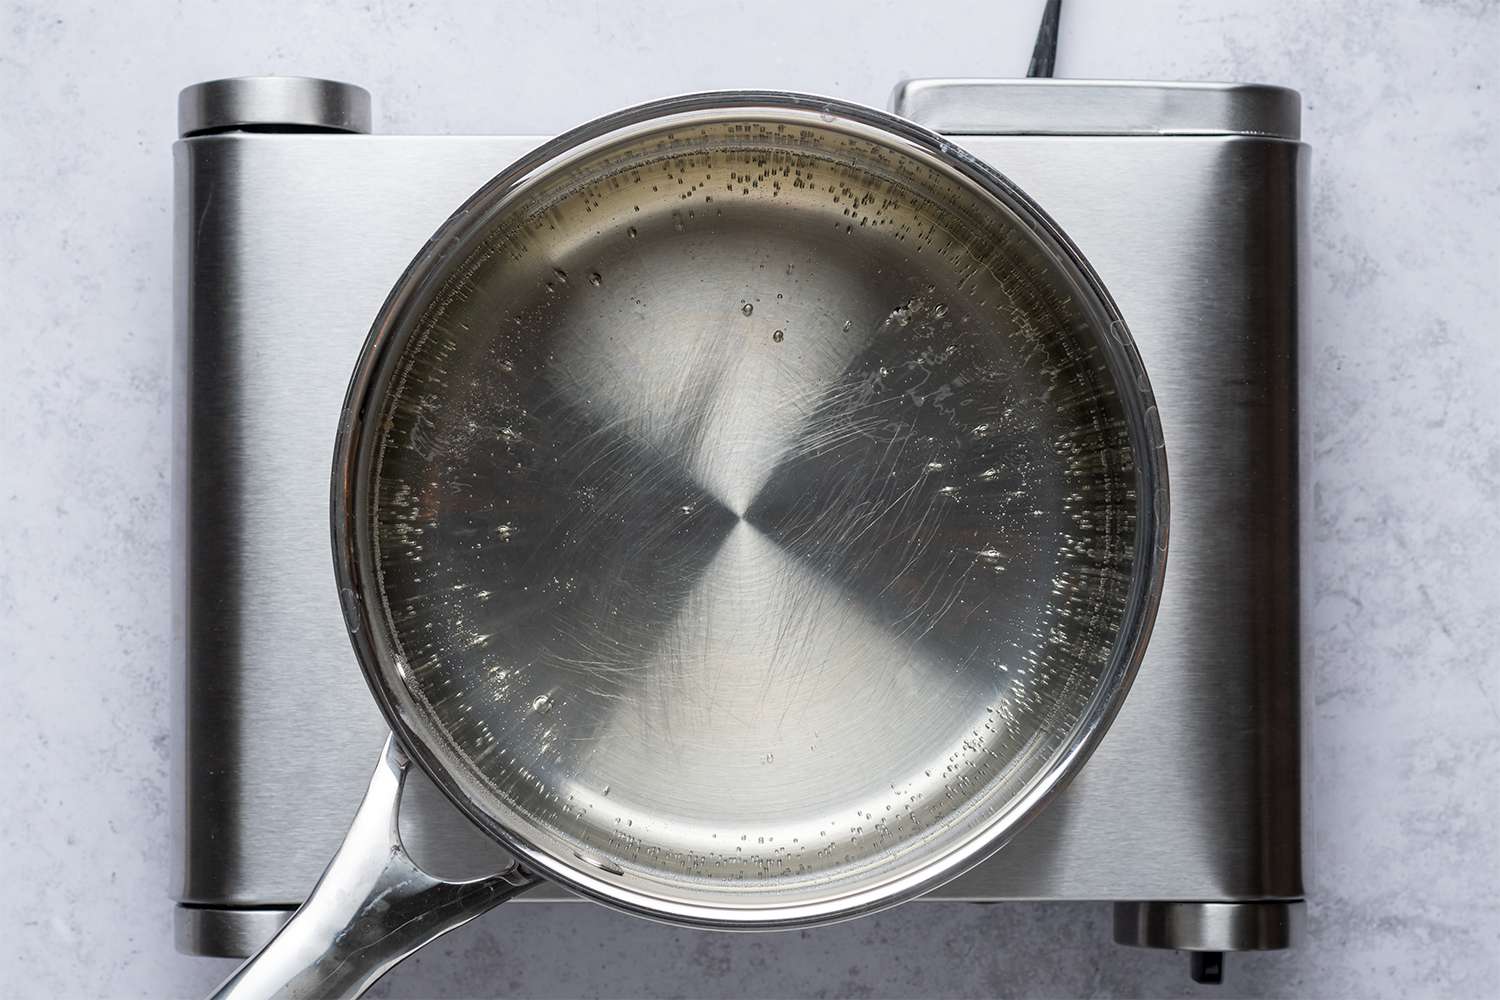 Water, sugar and salt mixture in a saucepan on a burner 